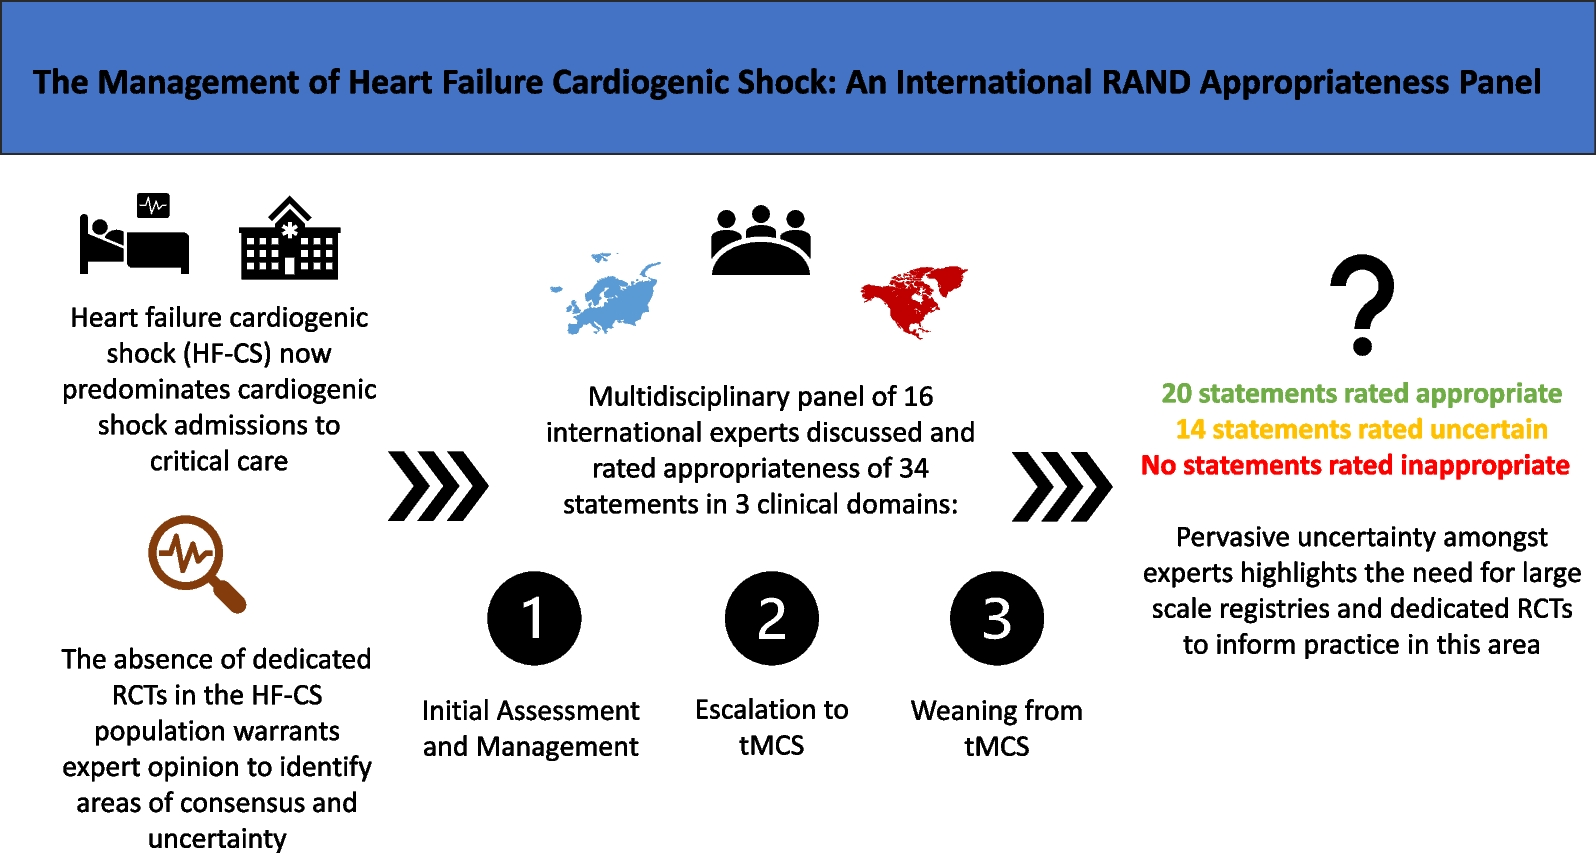 The management of heart failure cardiogenic shock: an international RAND appropriateness panel